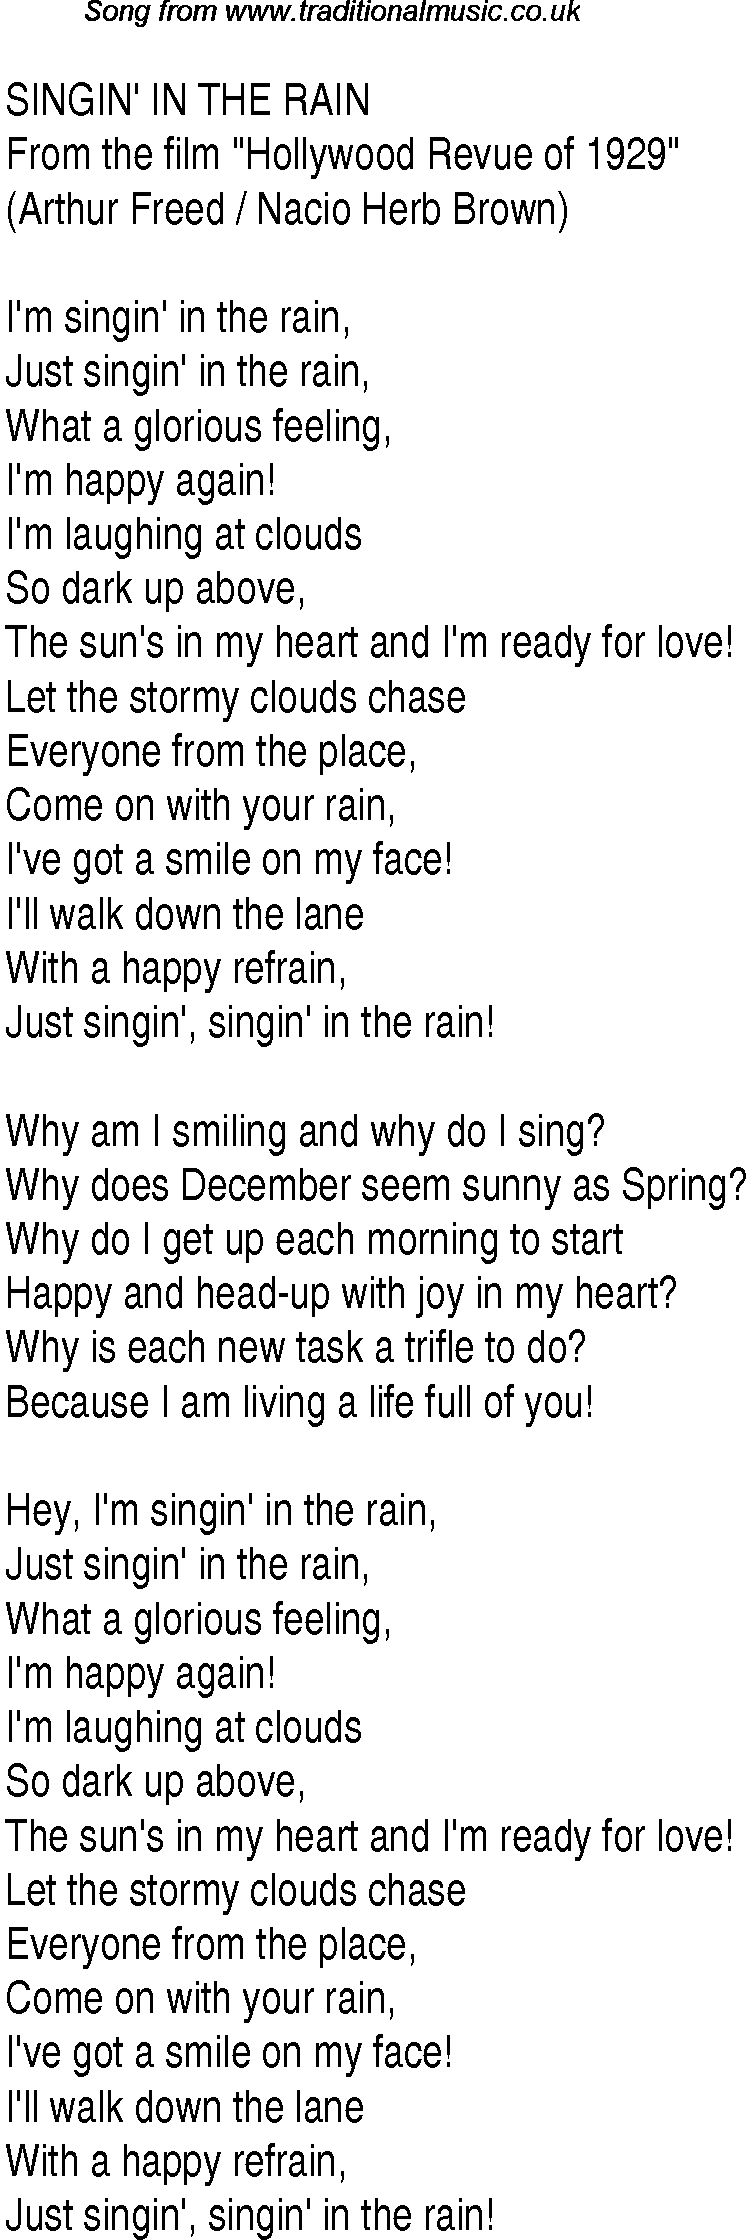 1940s top songs - lyrics for SINGIN' IN THE RAIN